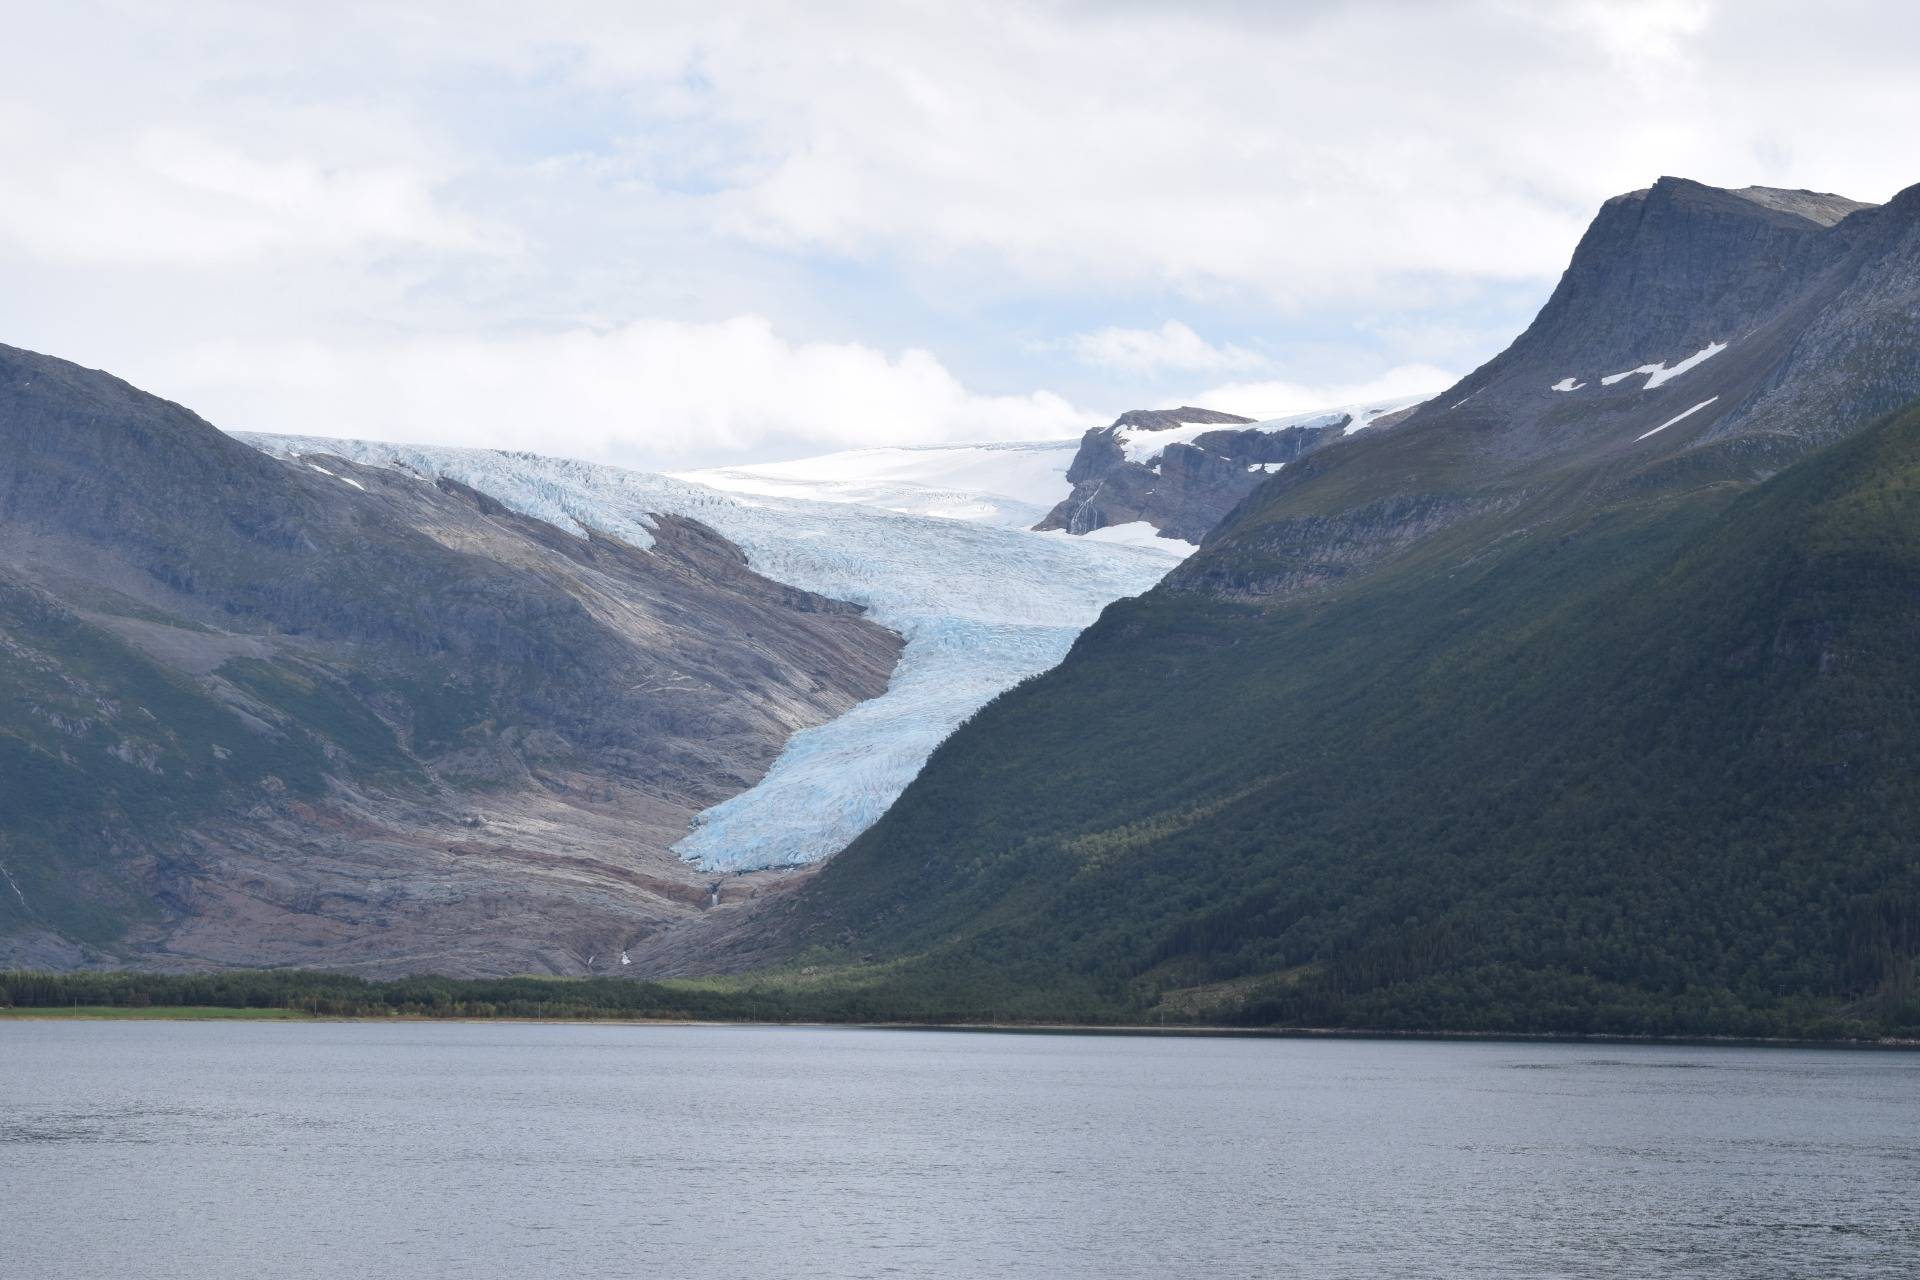 Massive glacier in Norway